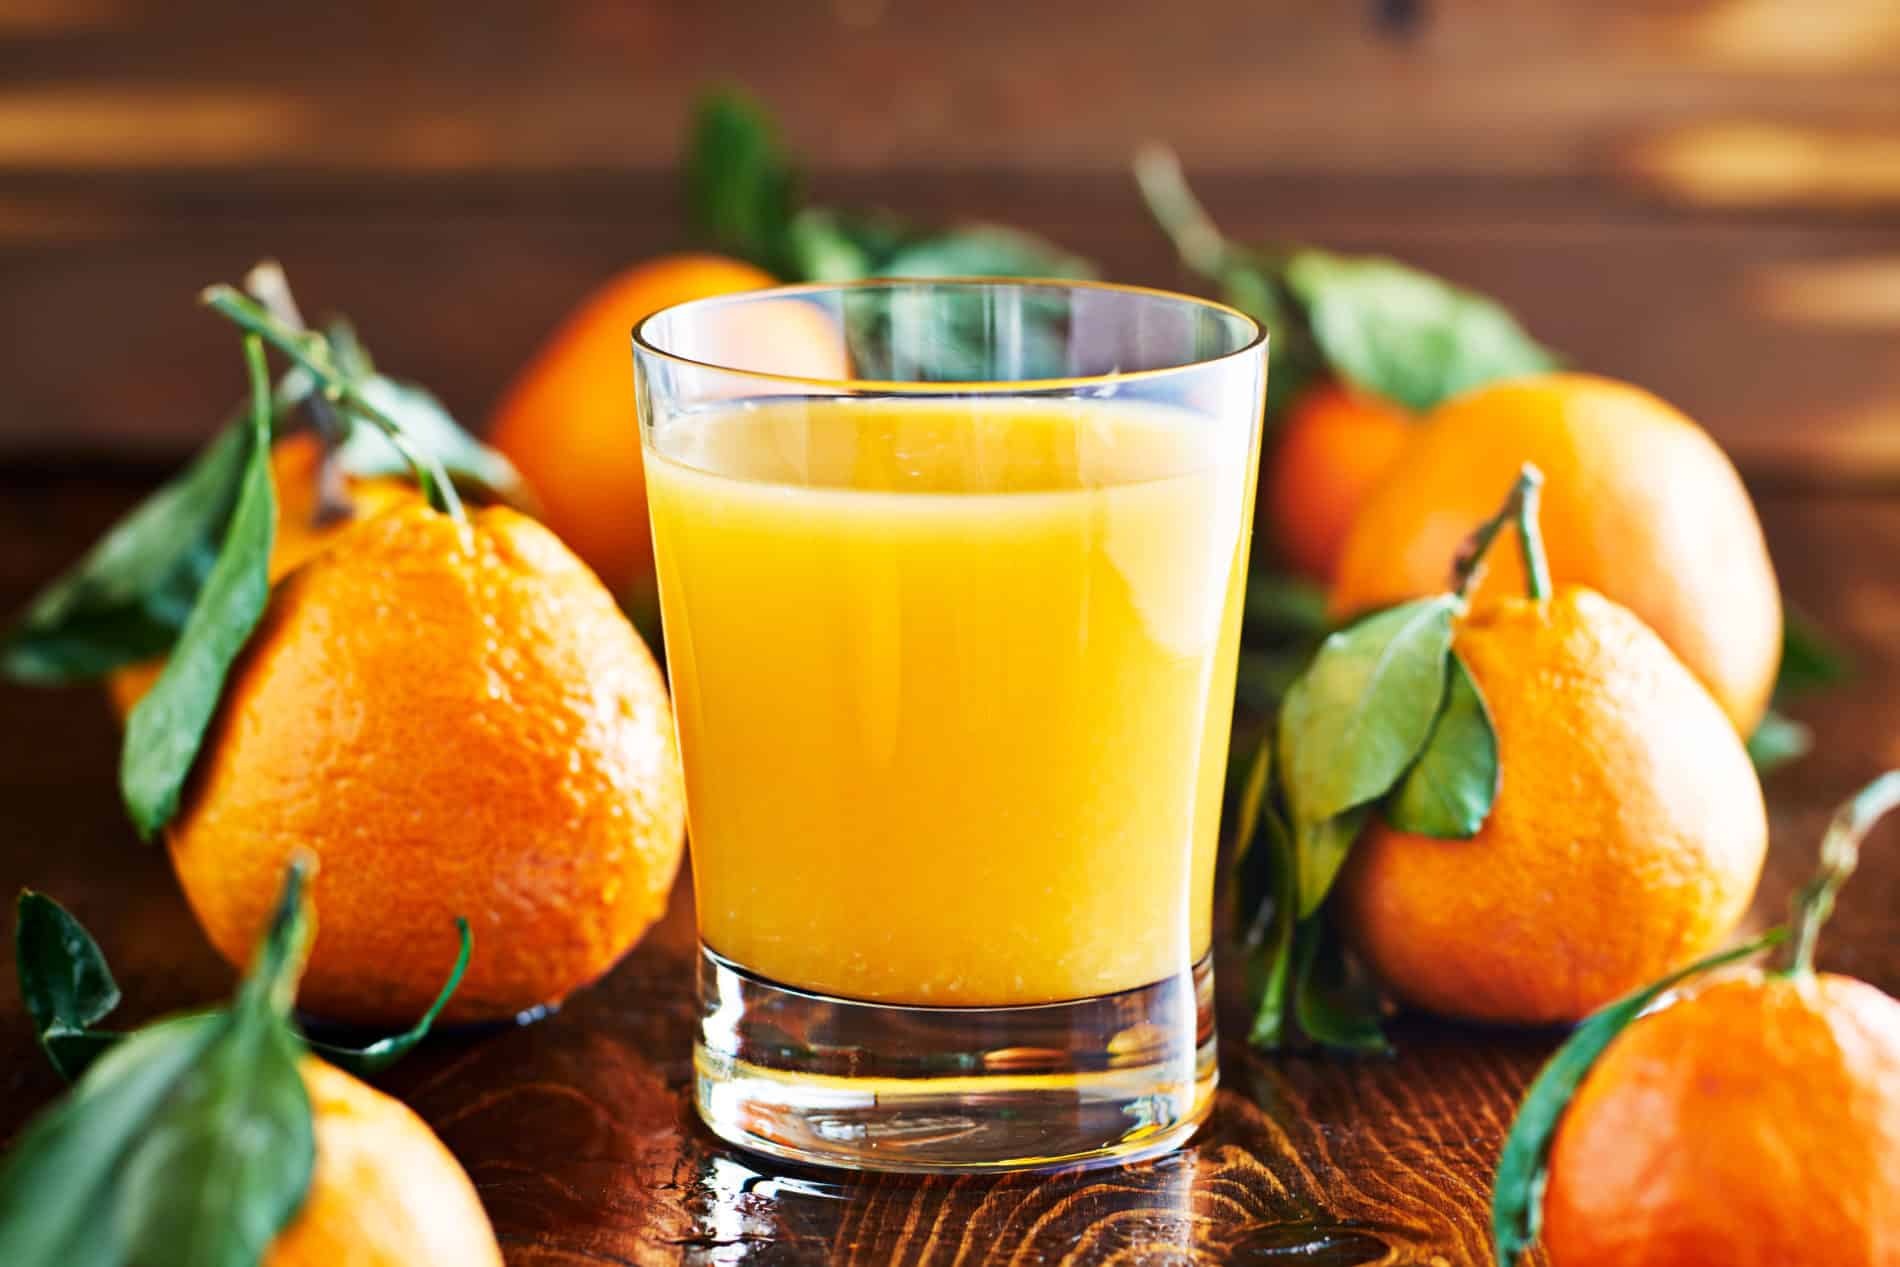 Simple Recipe To Make Orange Juice At Home Recipe In Buol City